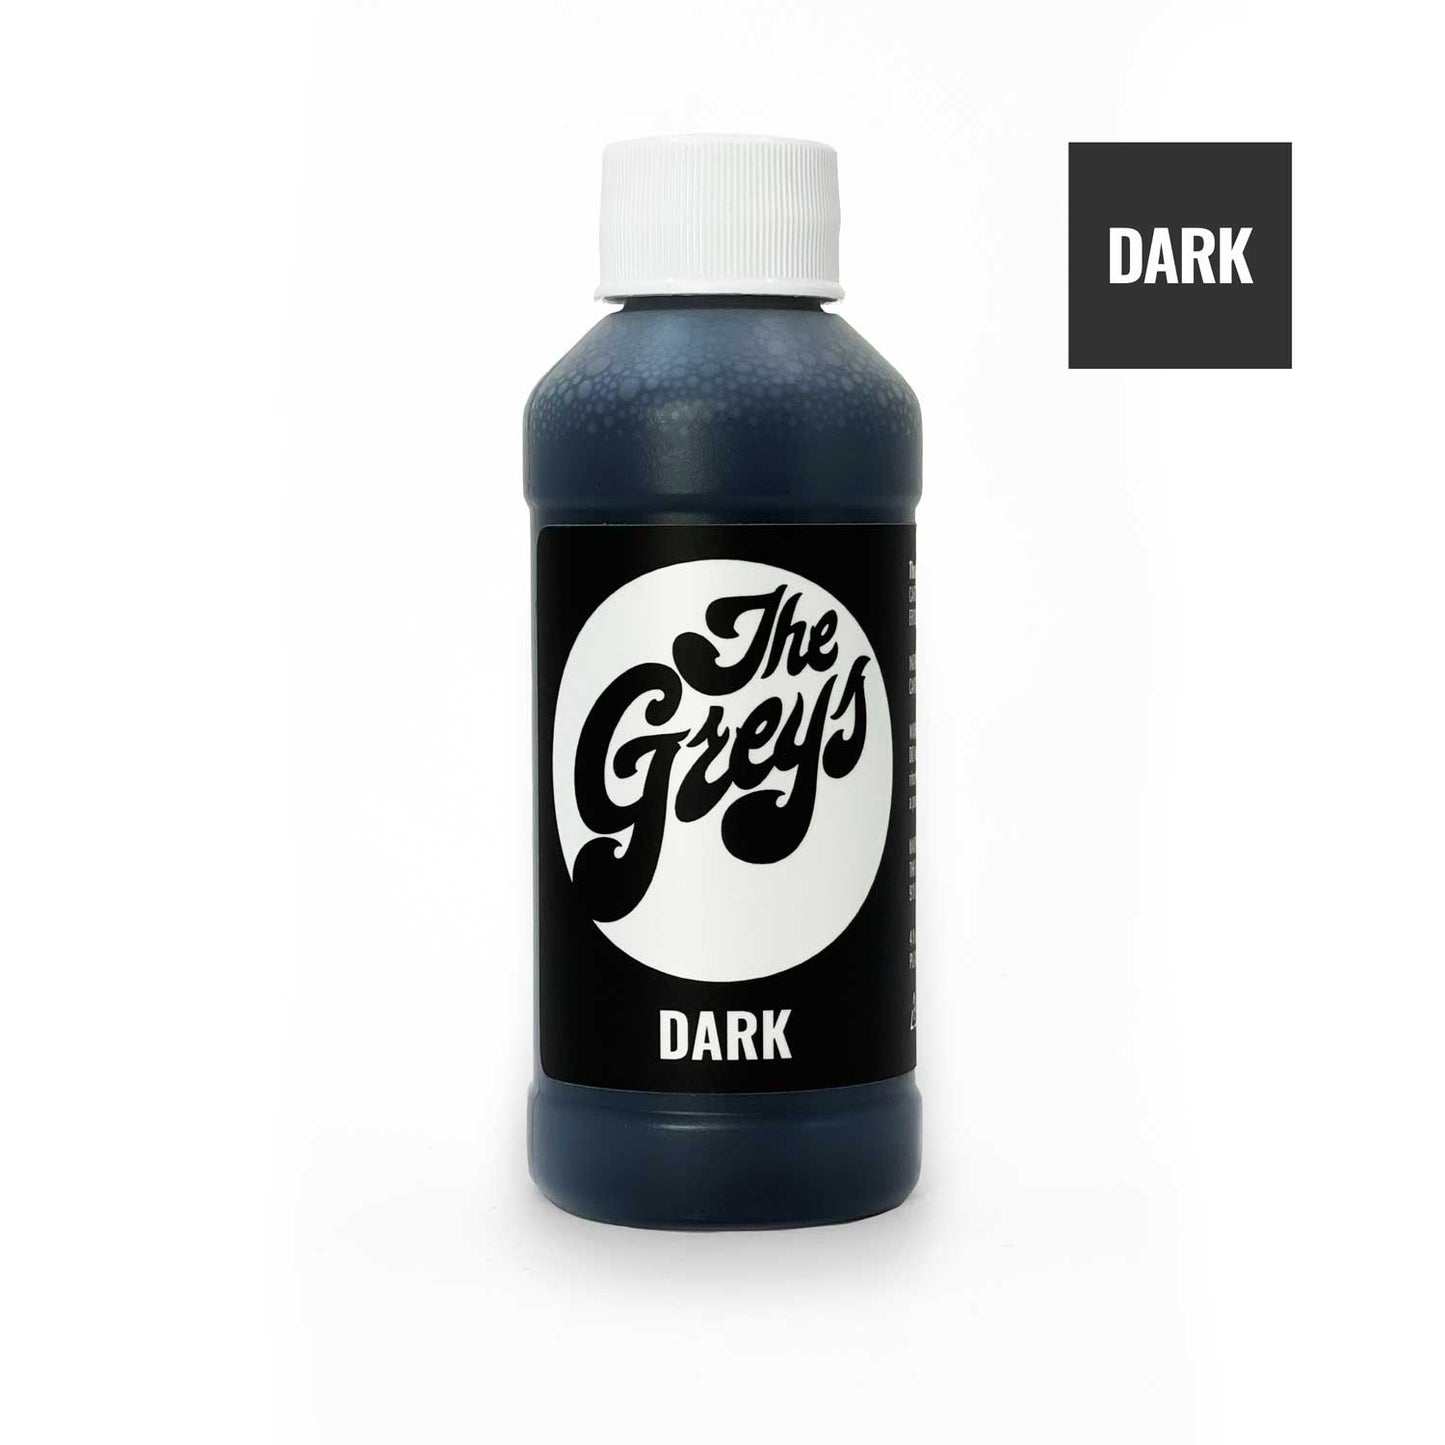 The Greys black carbon wash tattoo ink in Dark